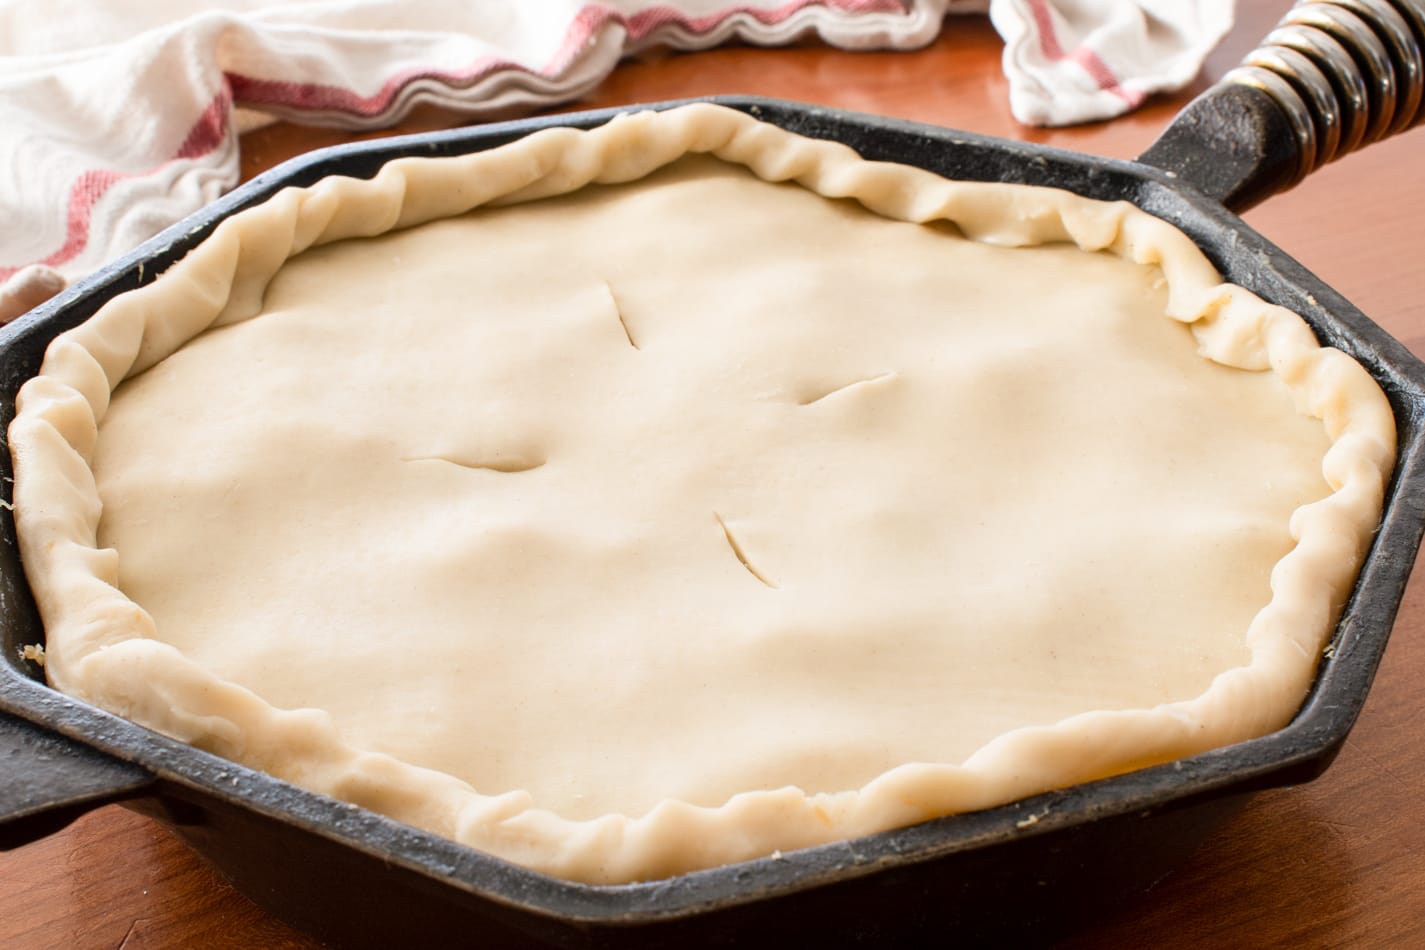 Skillet Turkey Pot Pie